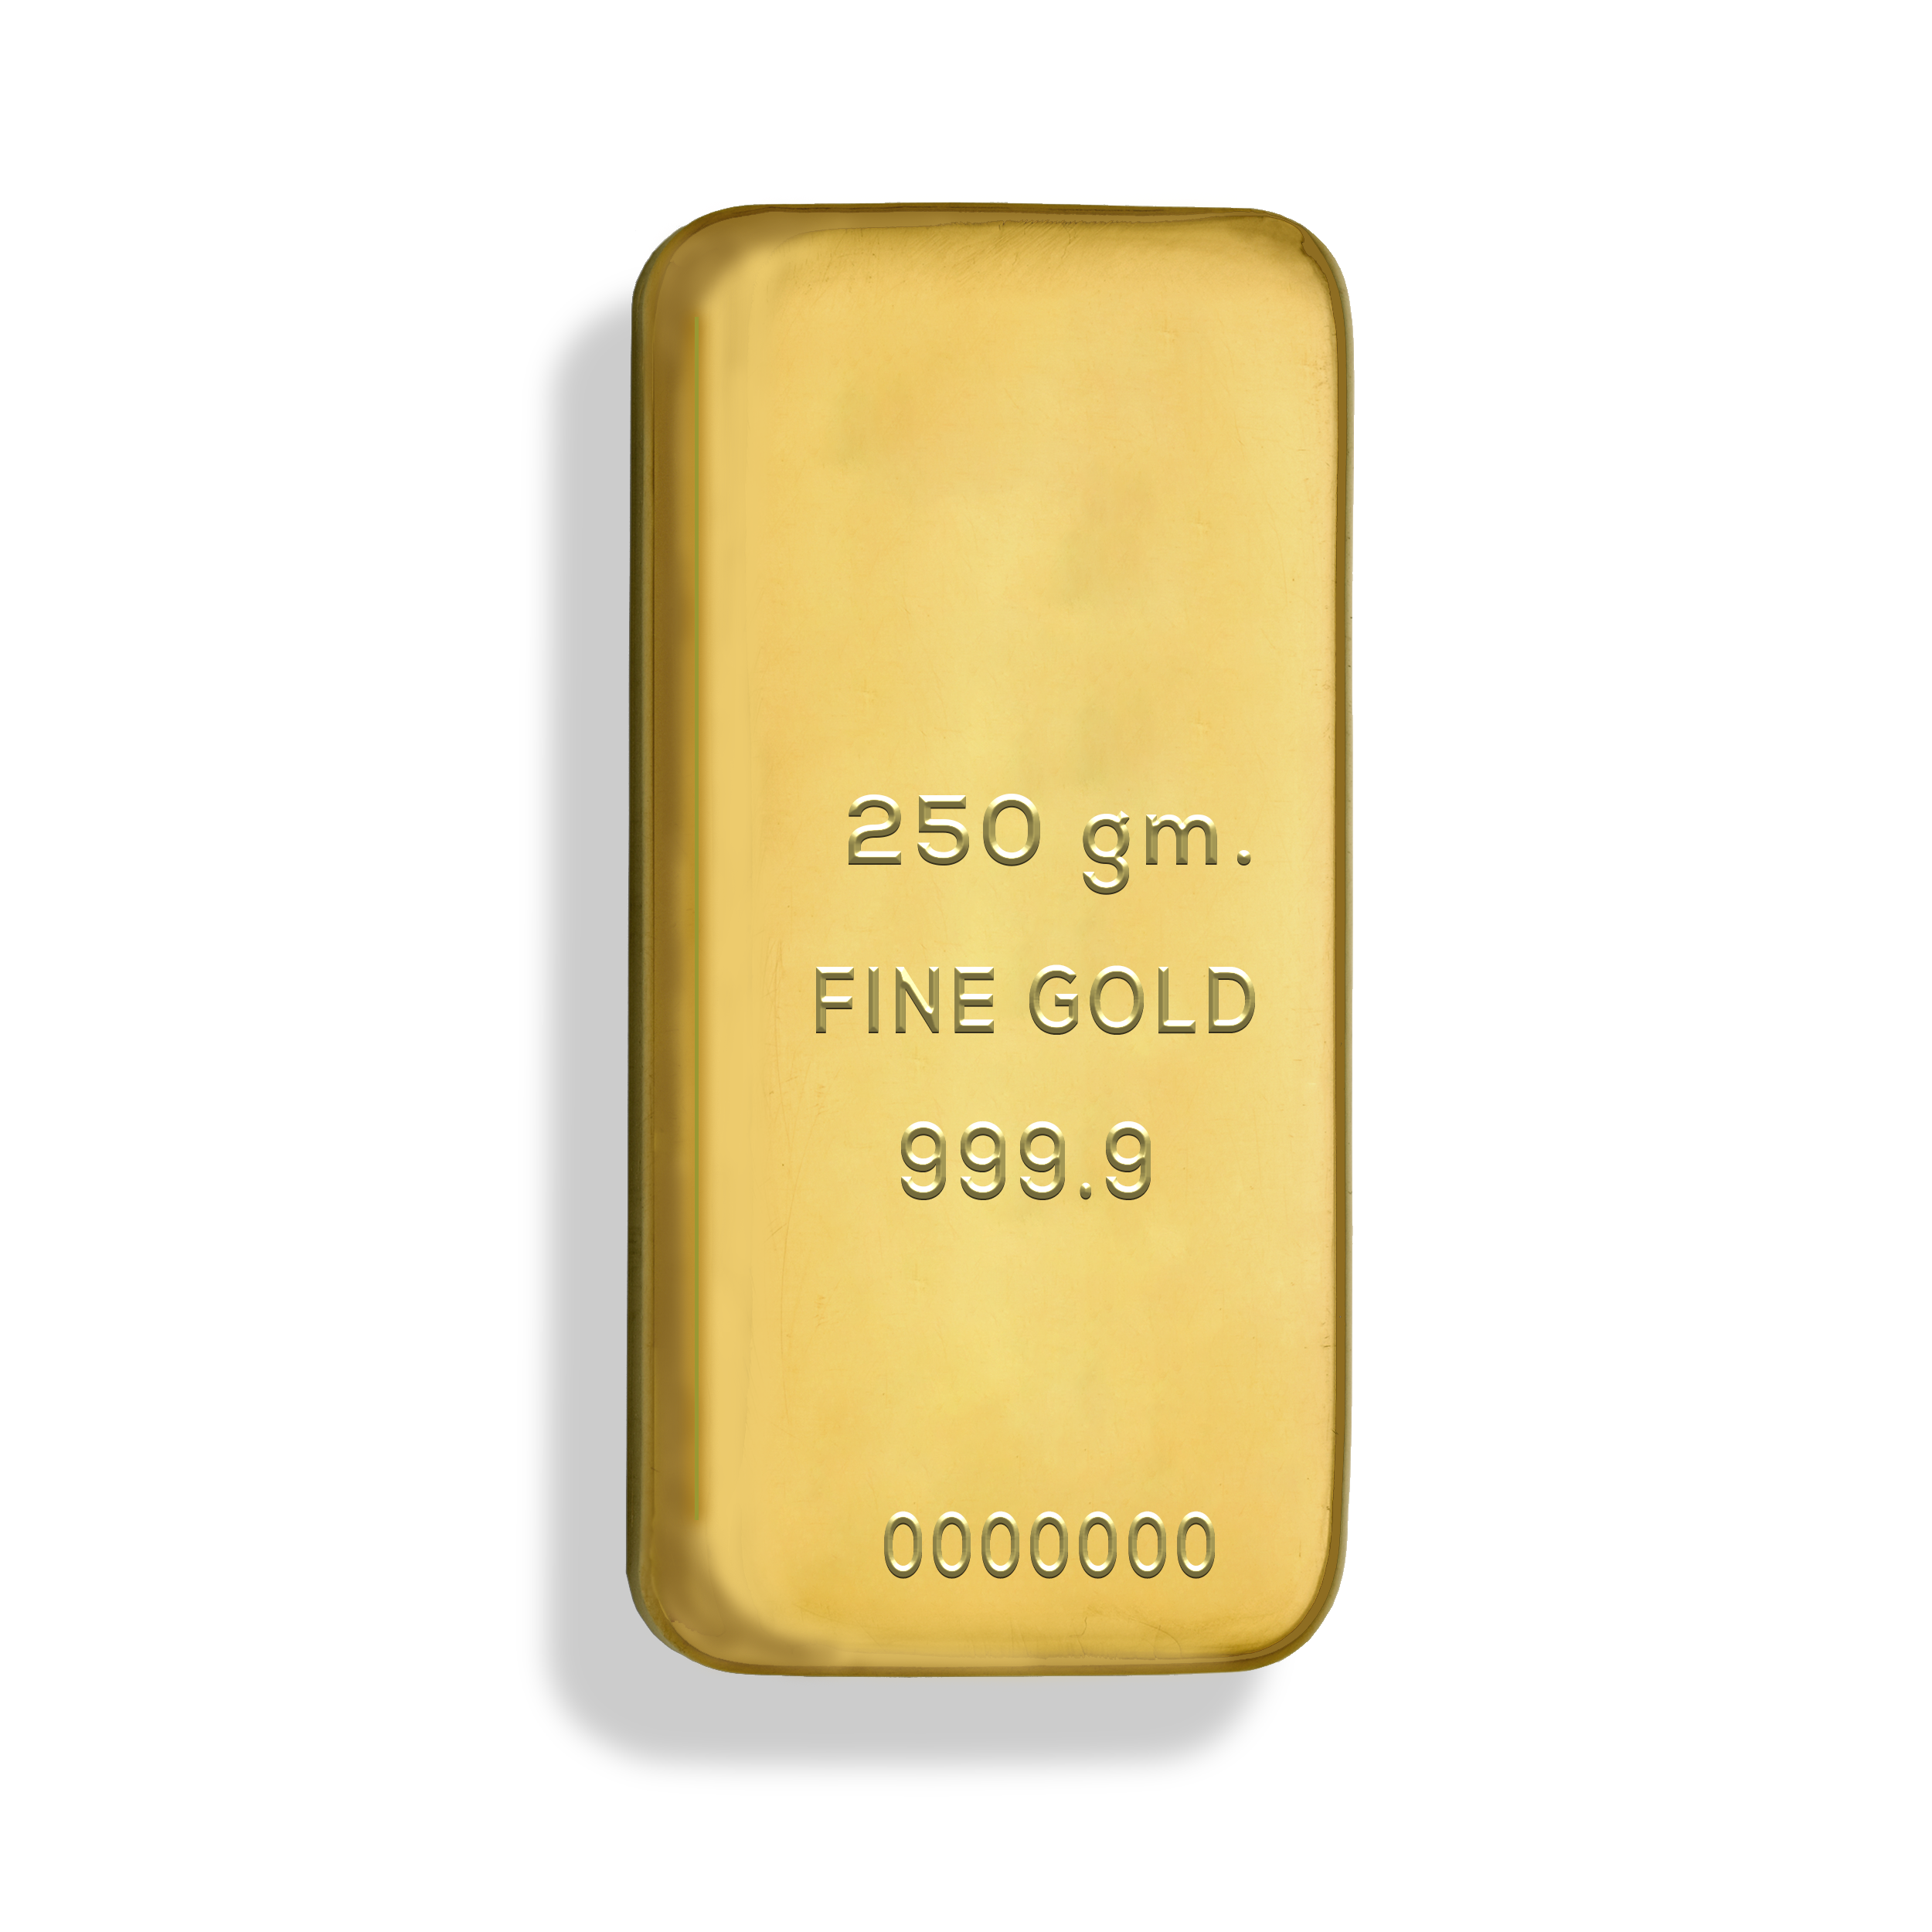 Золото 999 9. Слиток золота 250 грамм. Fine Gold 999.9 uzb. Слиток Fine Gold 1000. Духи золотой слиток женские.